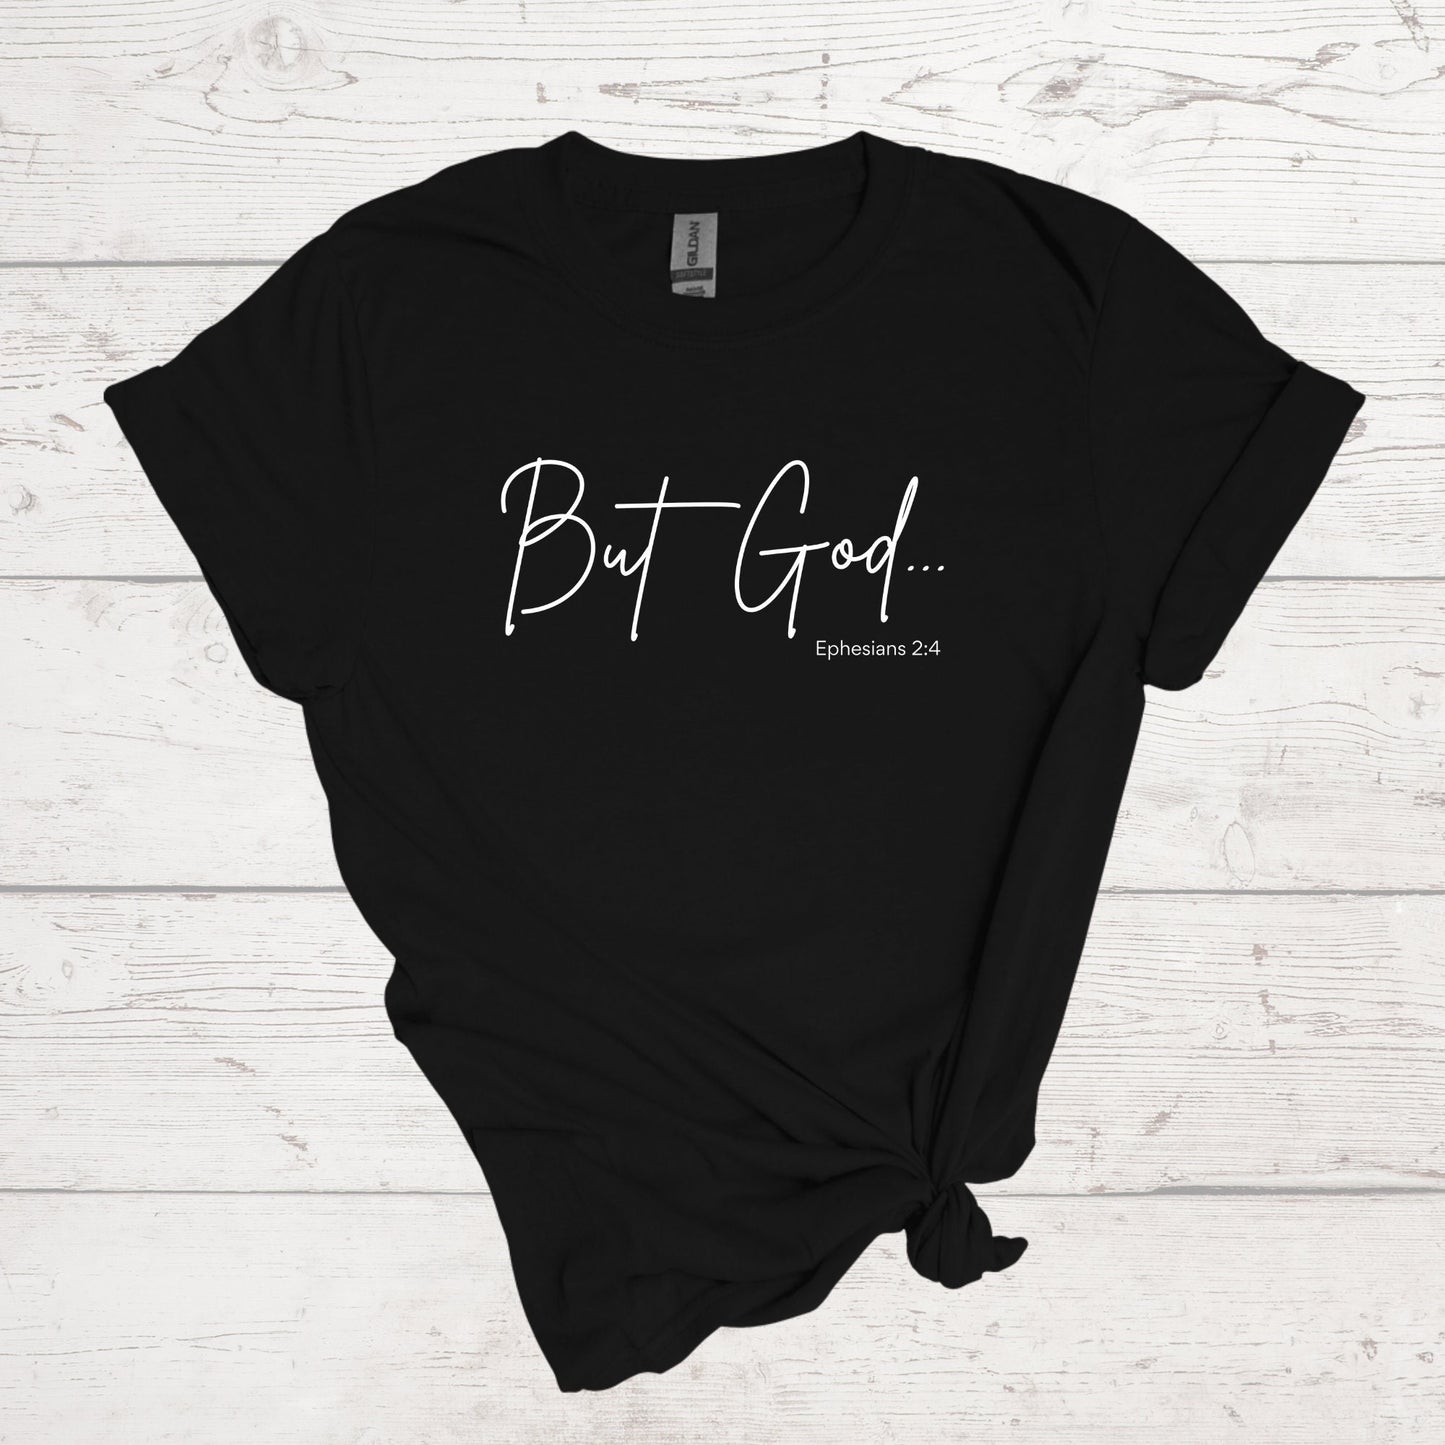 But God Shirt